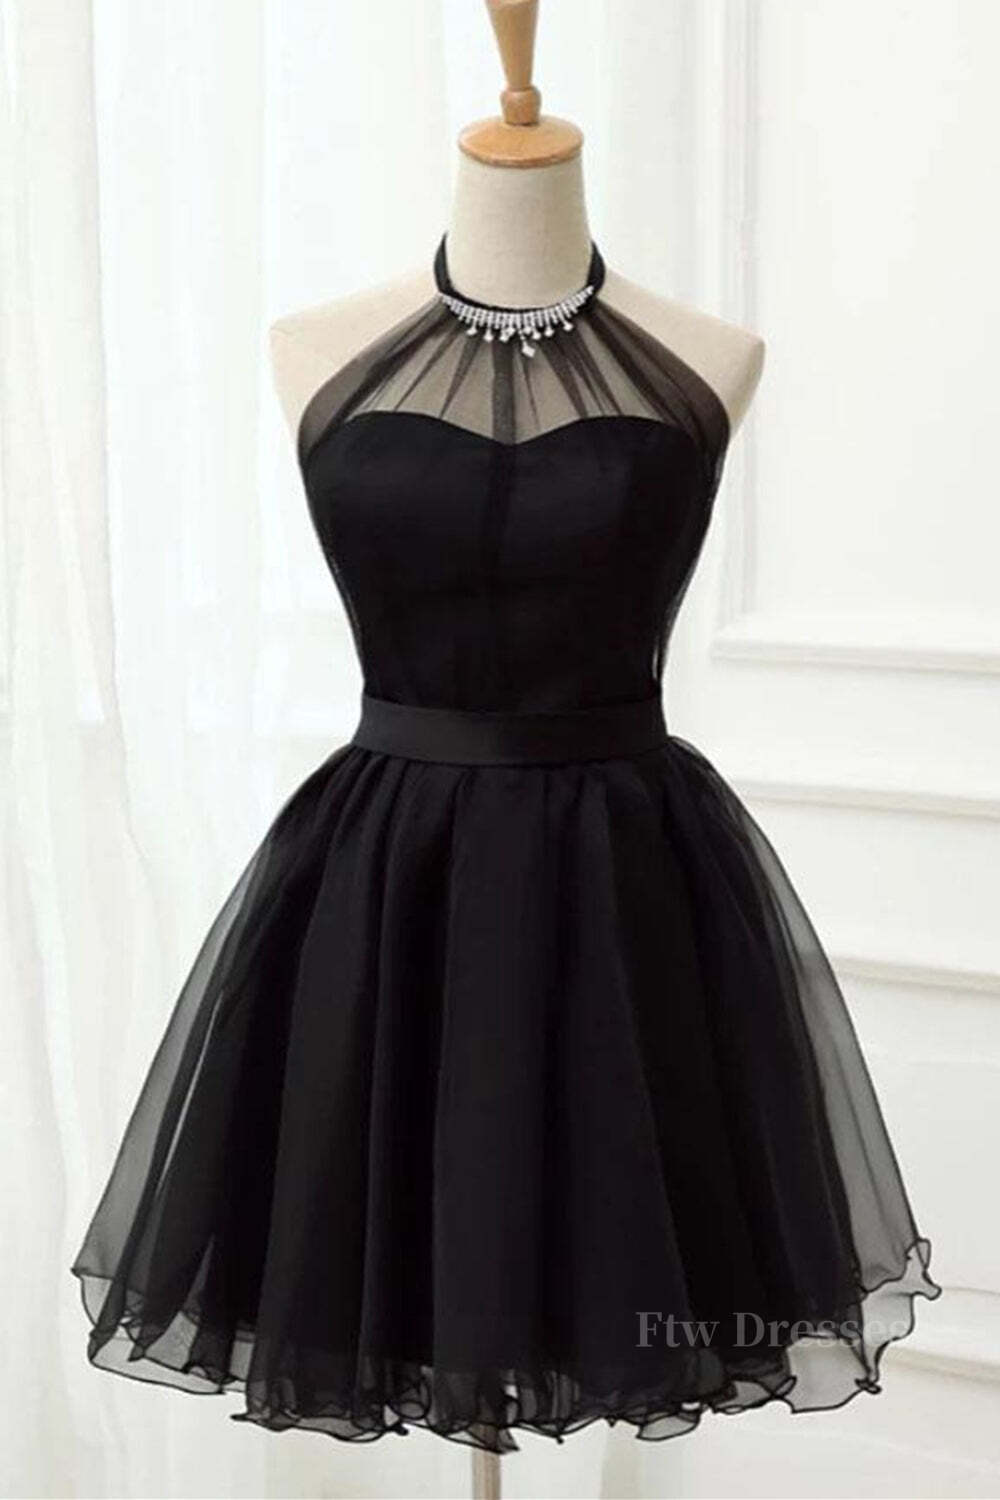 Halter Neck Backless Black Short Prom Dress, Open Back Black Homecoming Dress